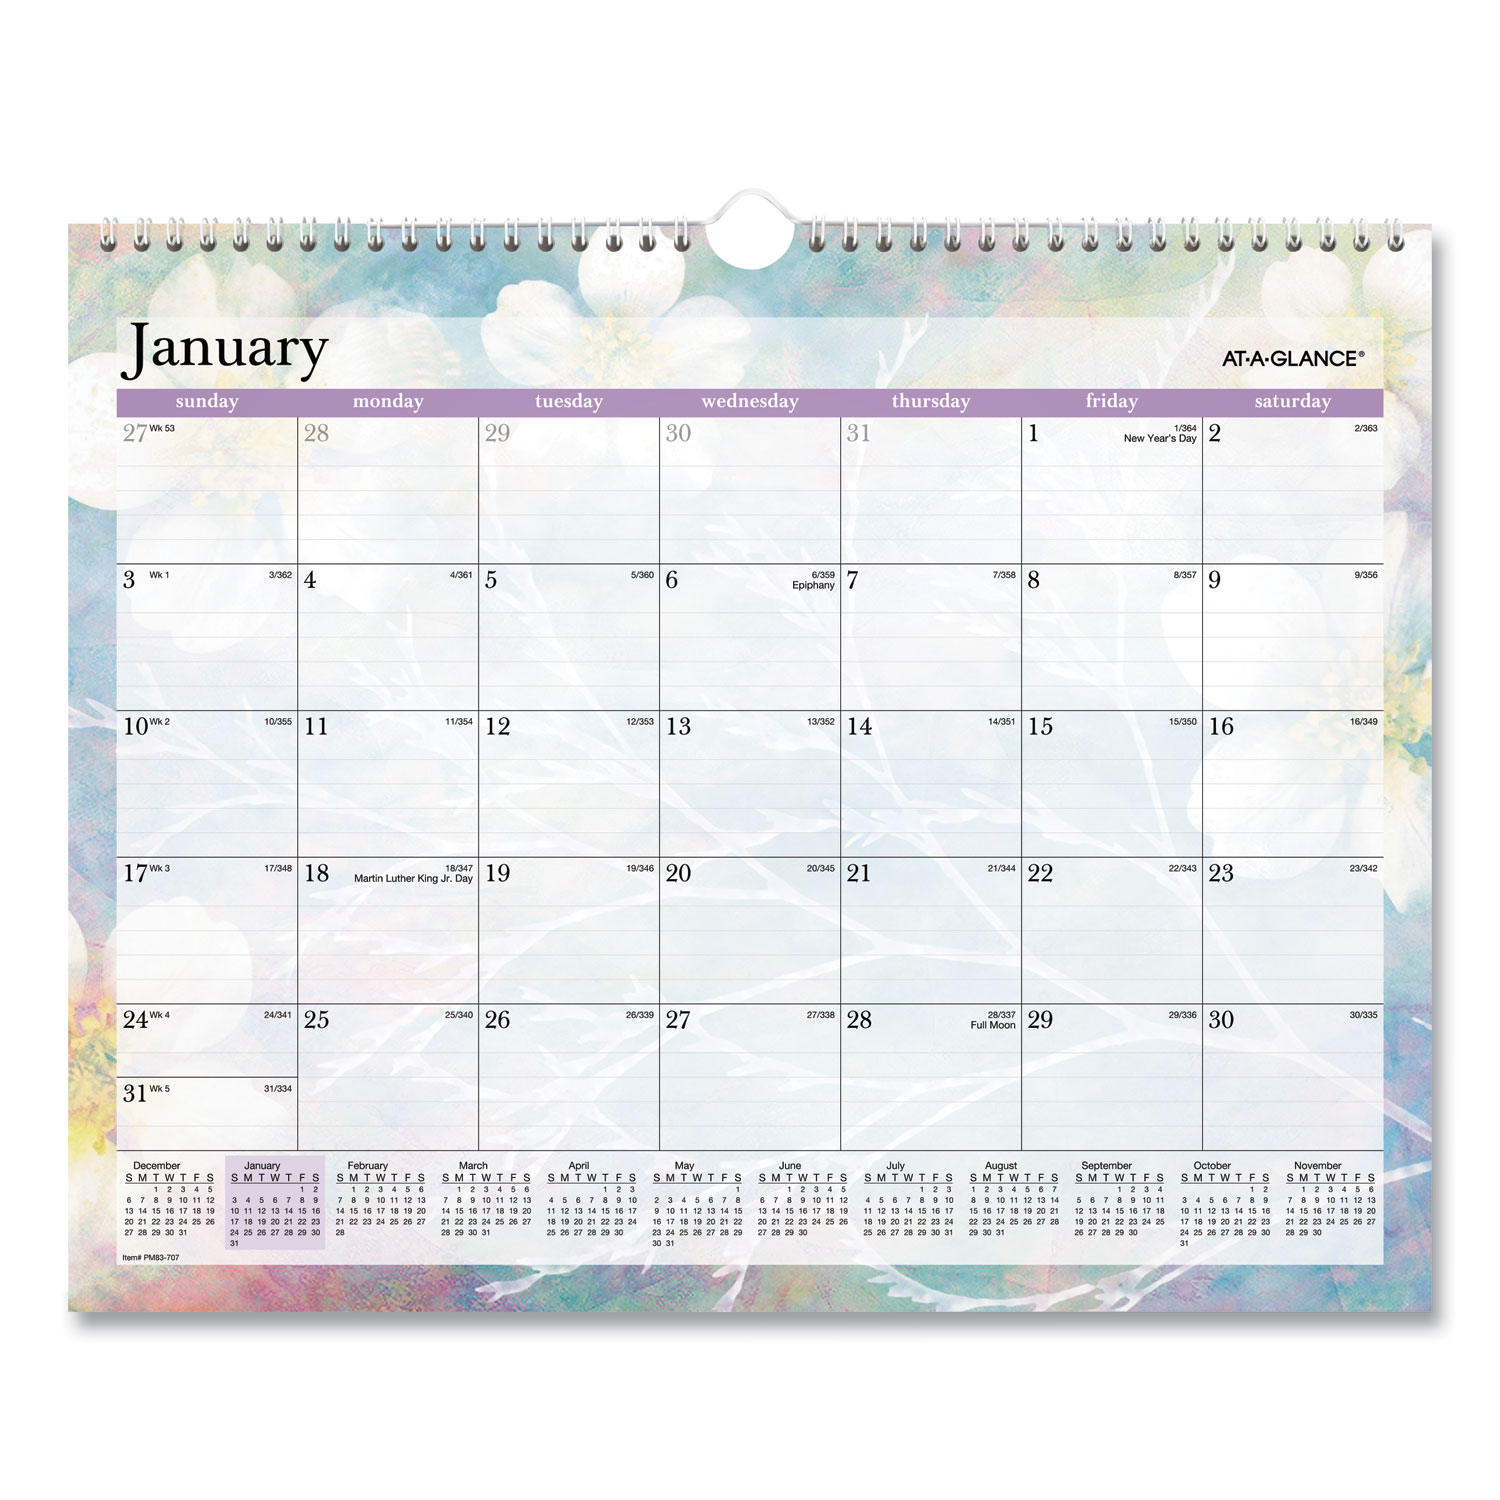 ATAGLANCE® Dreams Monthly Wall Calendar, Dreams Seasonal Artwork, 15